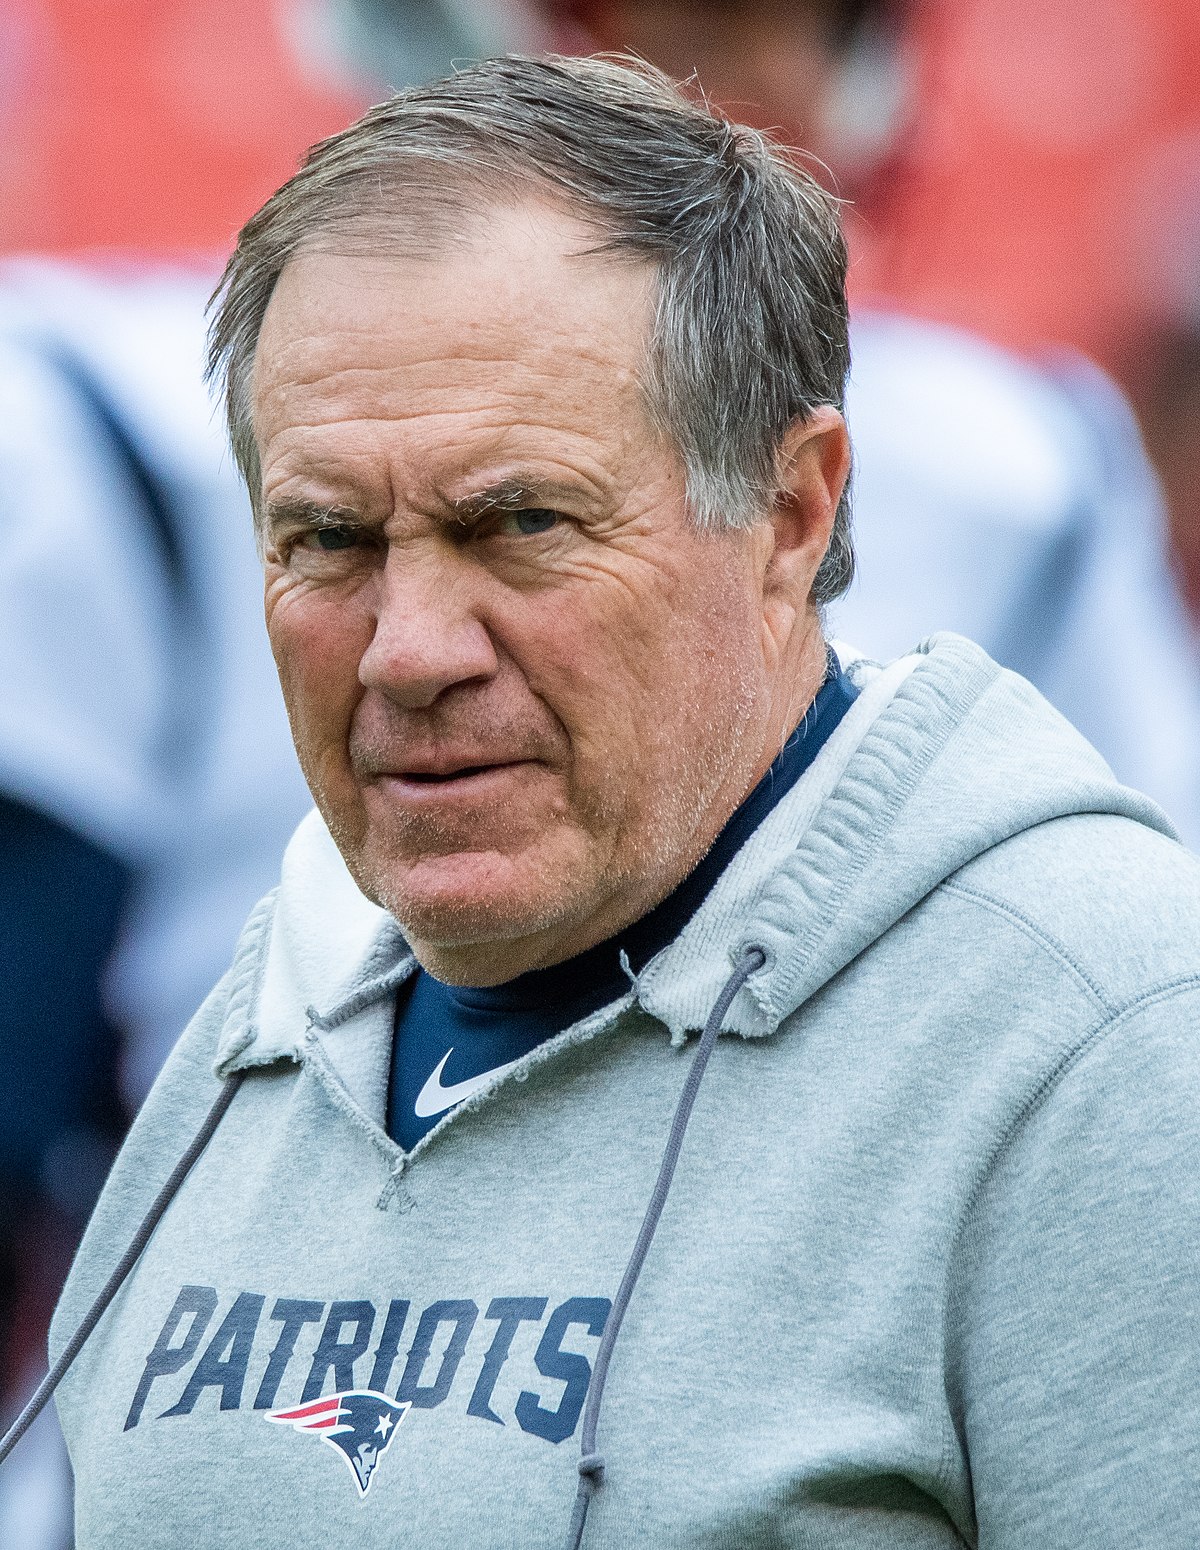 What Joe Judge has learned from Patriots head coach Bill Belichick